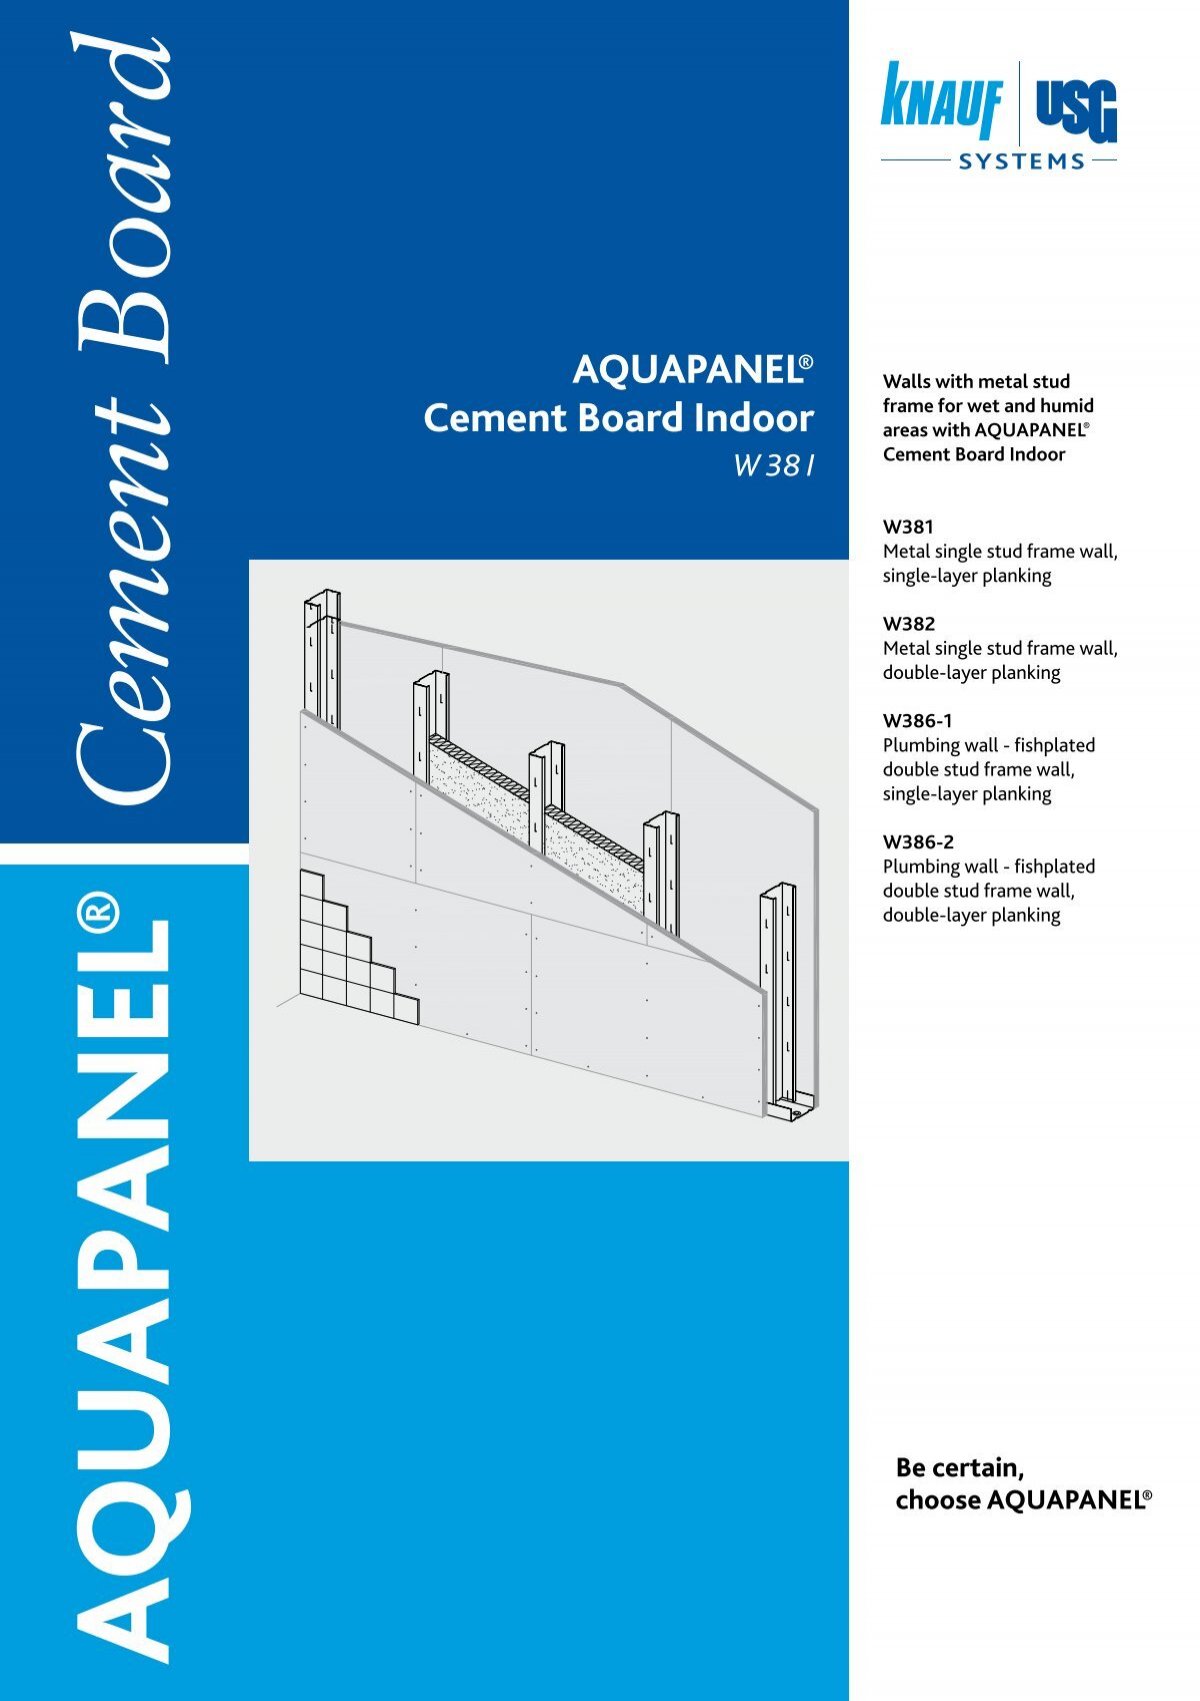 AQUAPANEL® Cement Board Indoor - Knauf